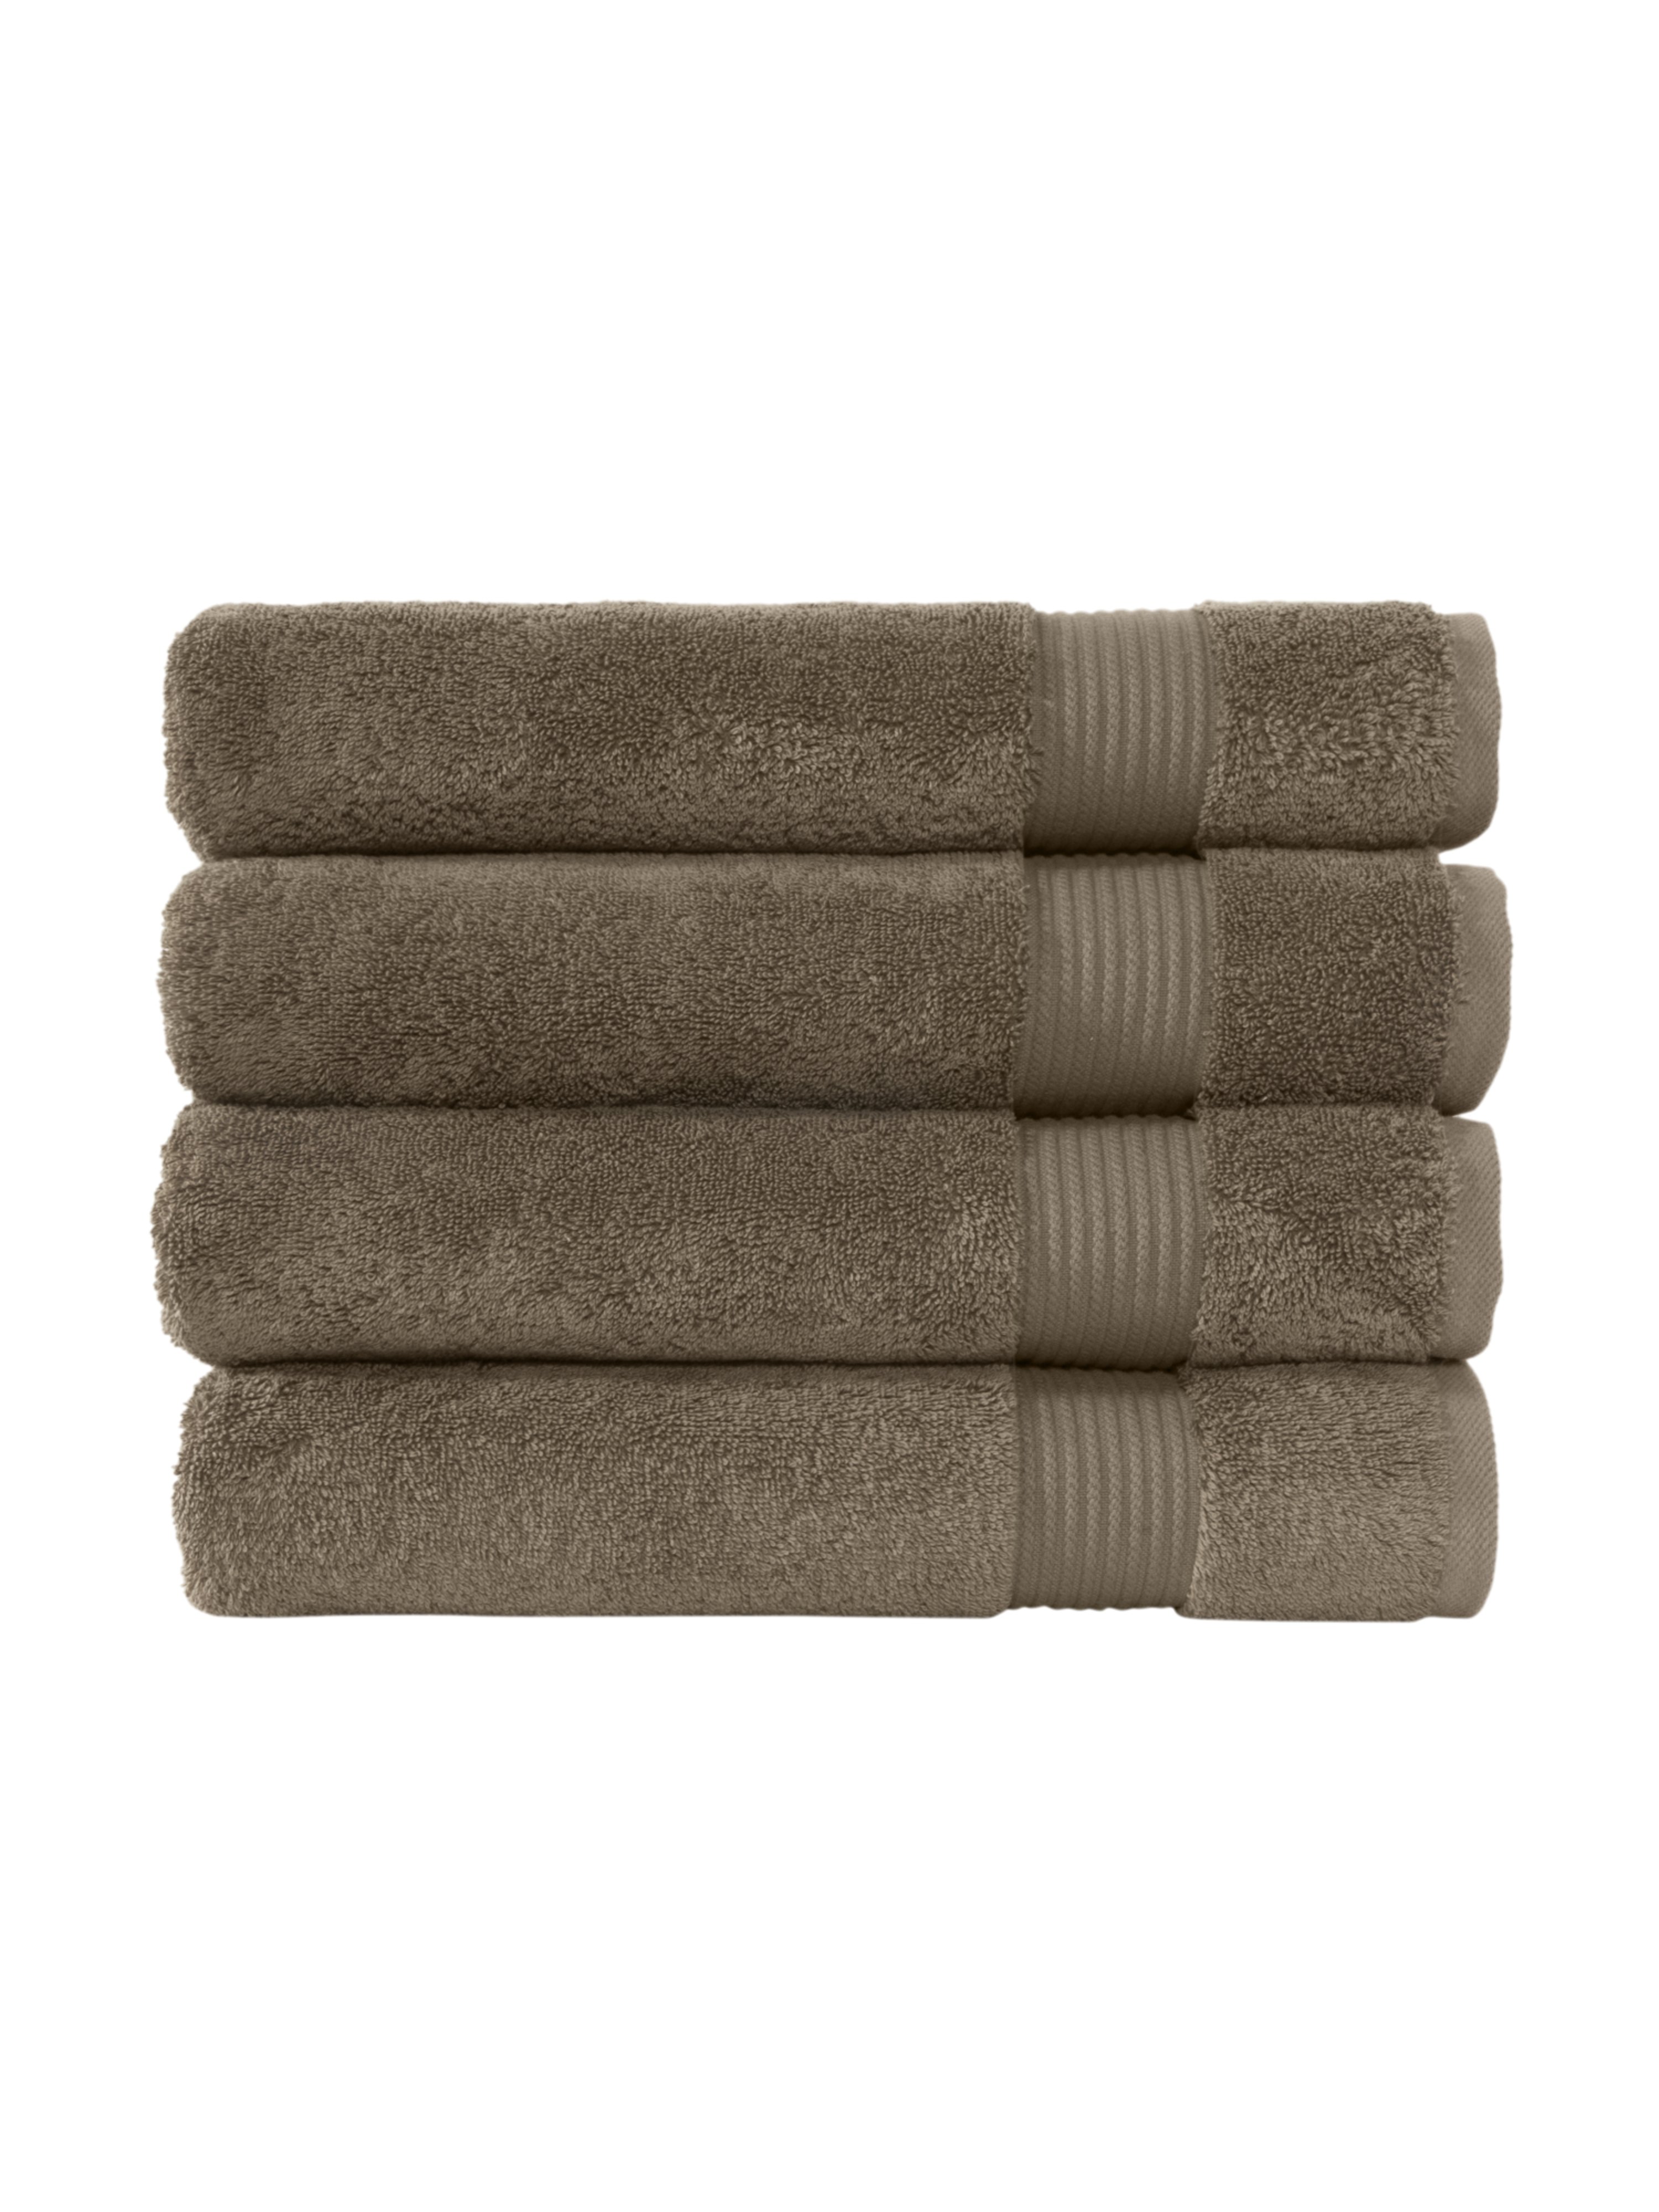 CLASSIC TURKISH TOWELS CLASSIC TURKISH TOWELS CLASSIC TURKISH TOWELS GENUINE COTTON SOFT ABSORBENT AMADEUS BATH TOWELS 30X5